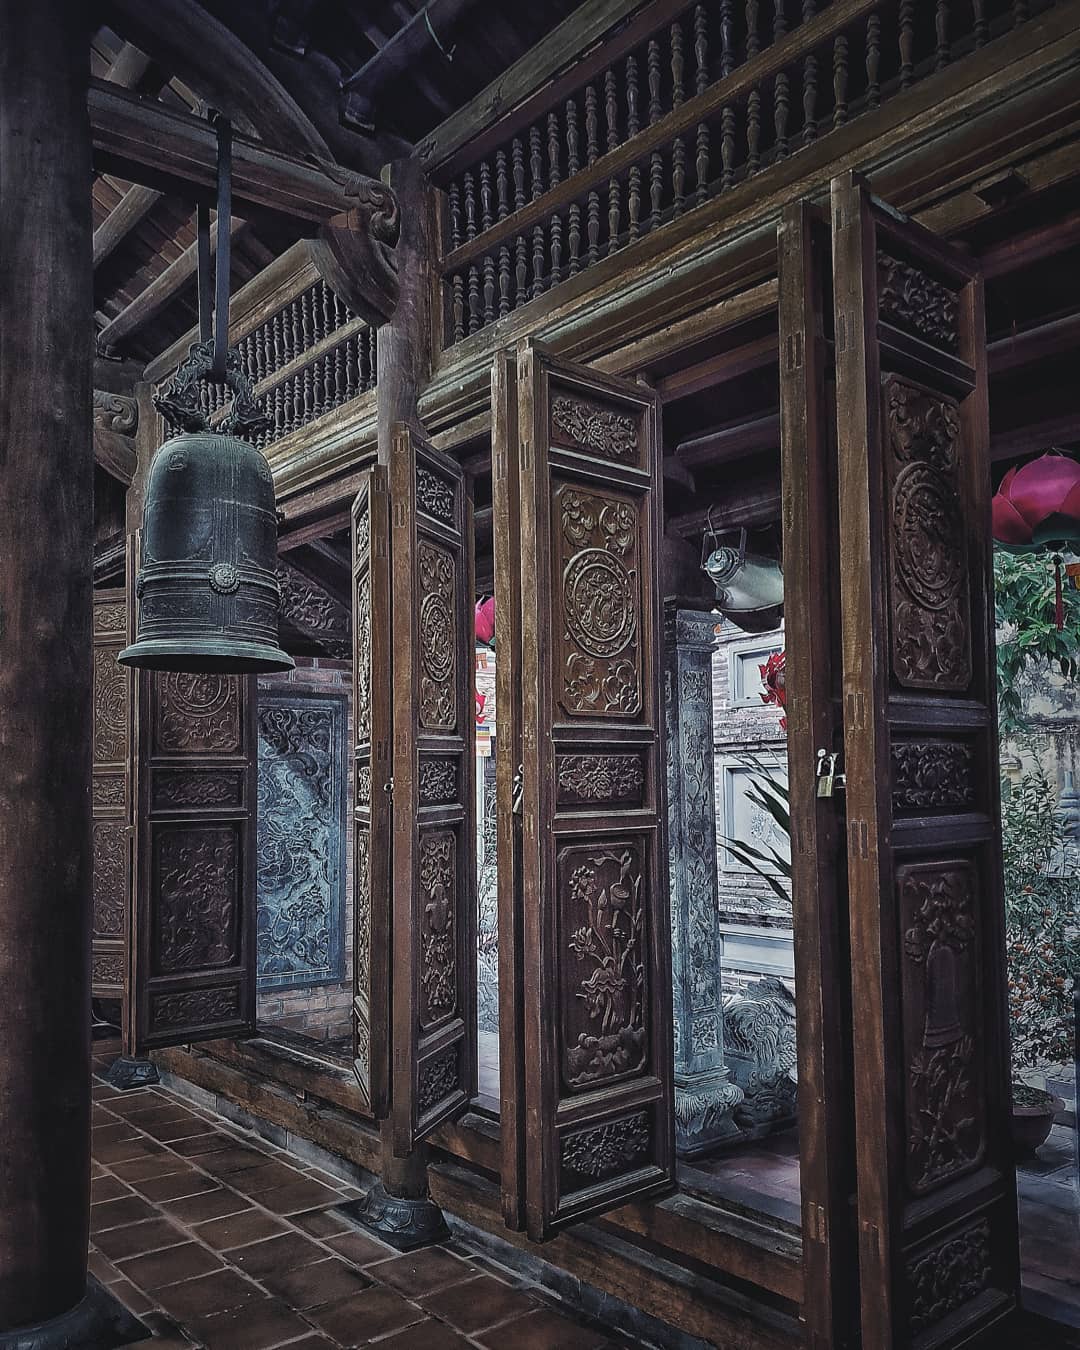 The pagoda is called Linh Quang Tu, Sung Khanh Tu, often called Ba Da pagoda, located at 03 Nha Tho street, Hang Trong ward, Hoan Kiem district, Hanoi city.